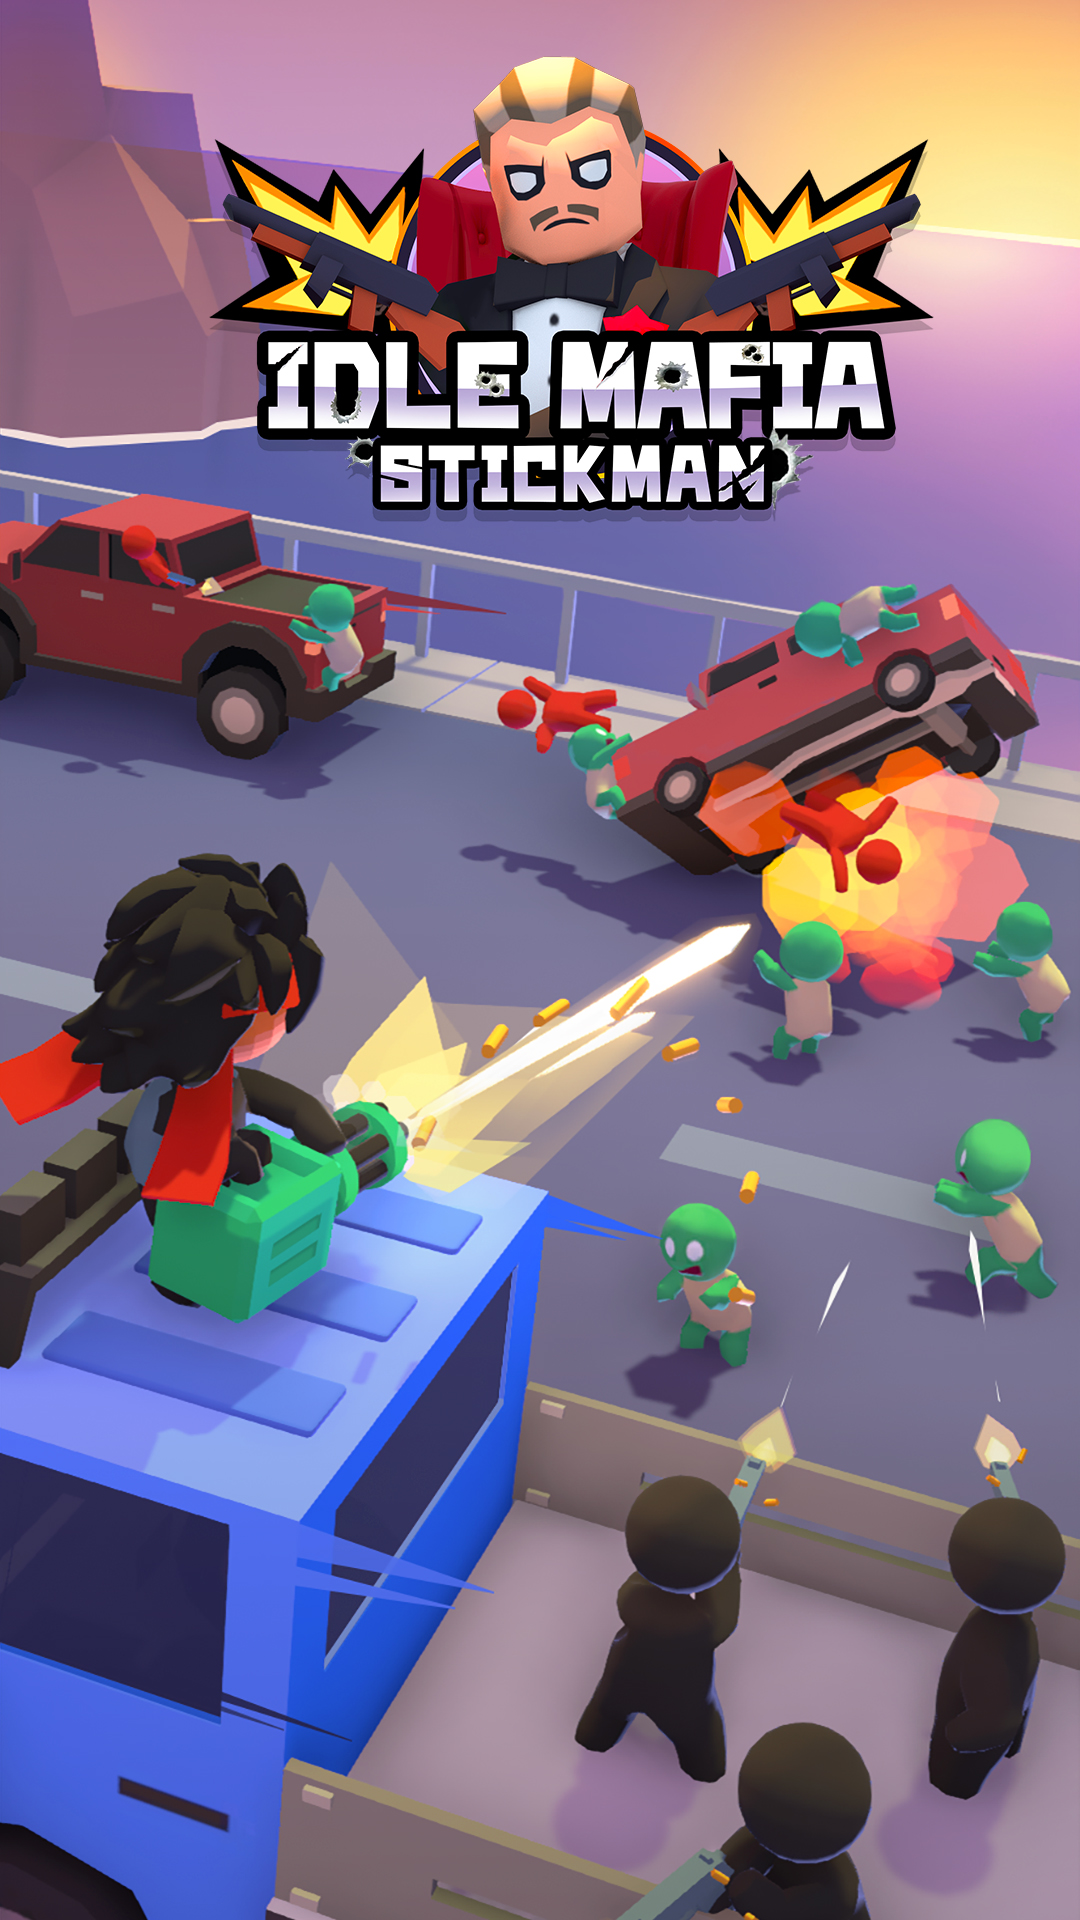 Скачать Stickman: Idle Mafia: Android Аркады игра на телефон и планшет.